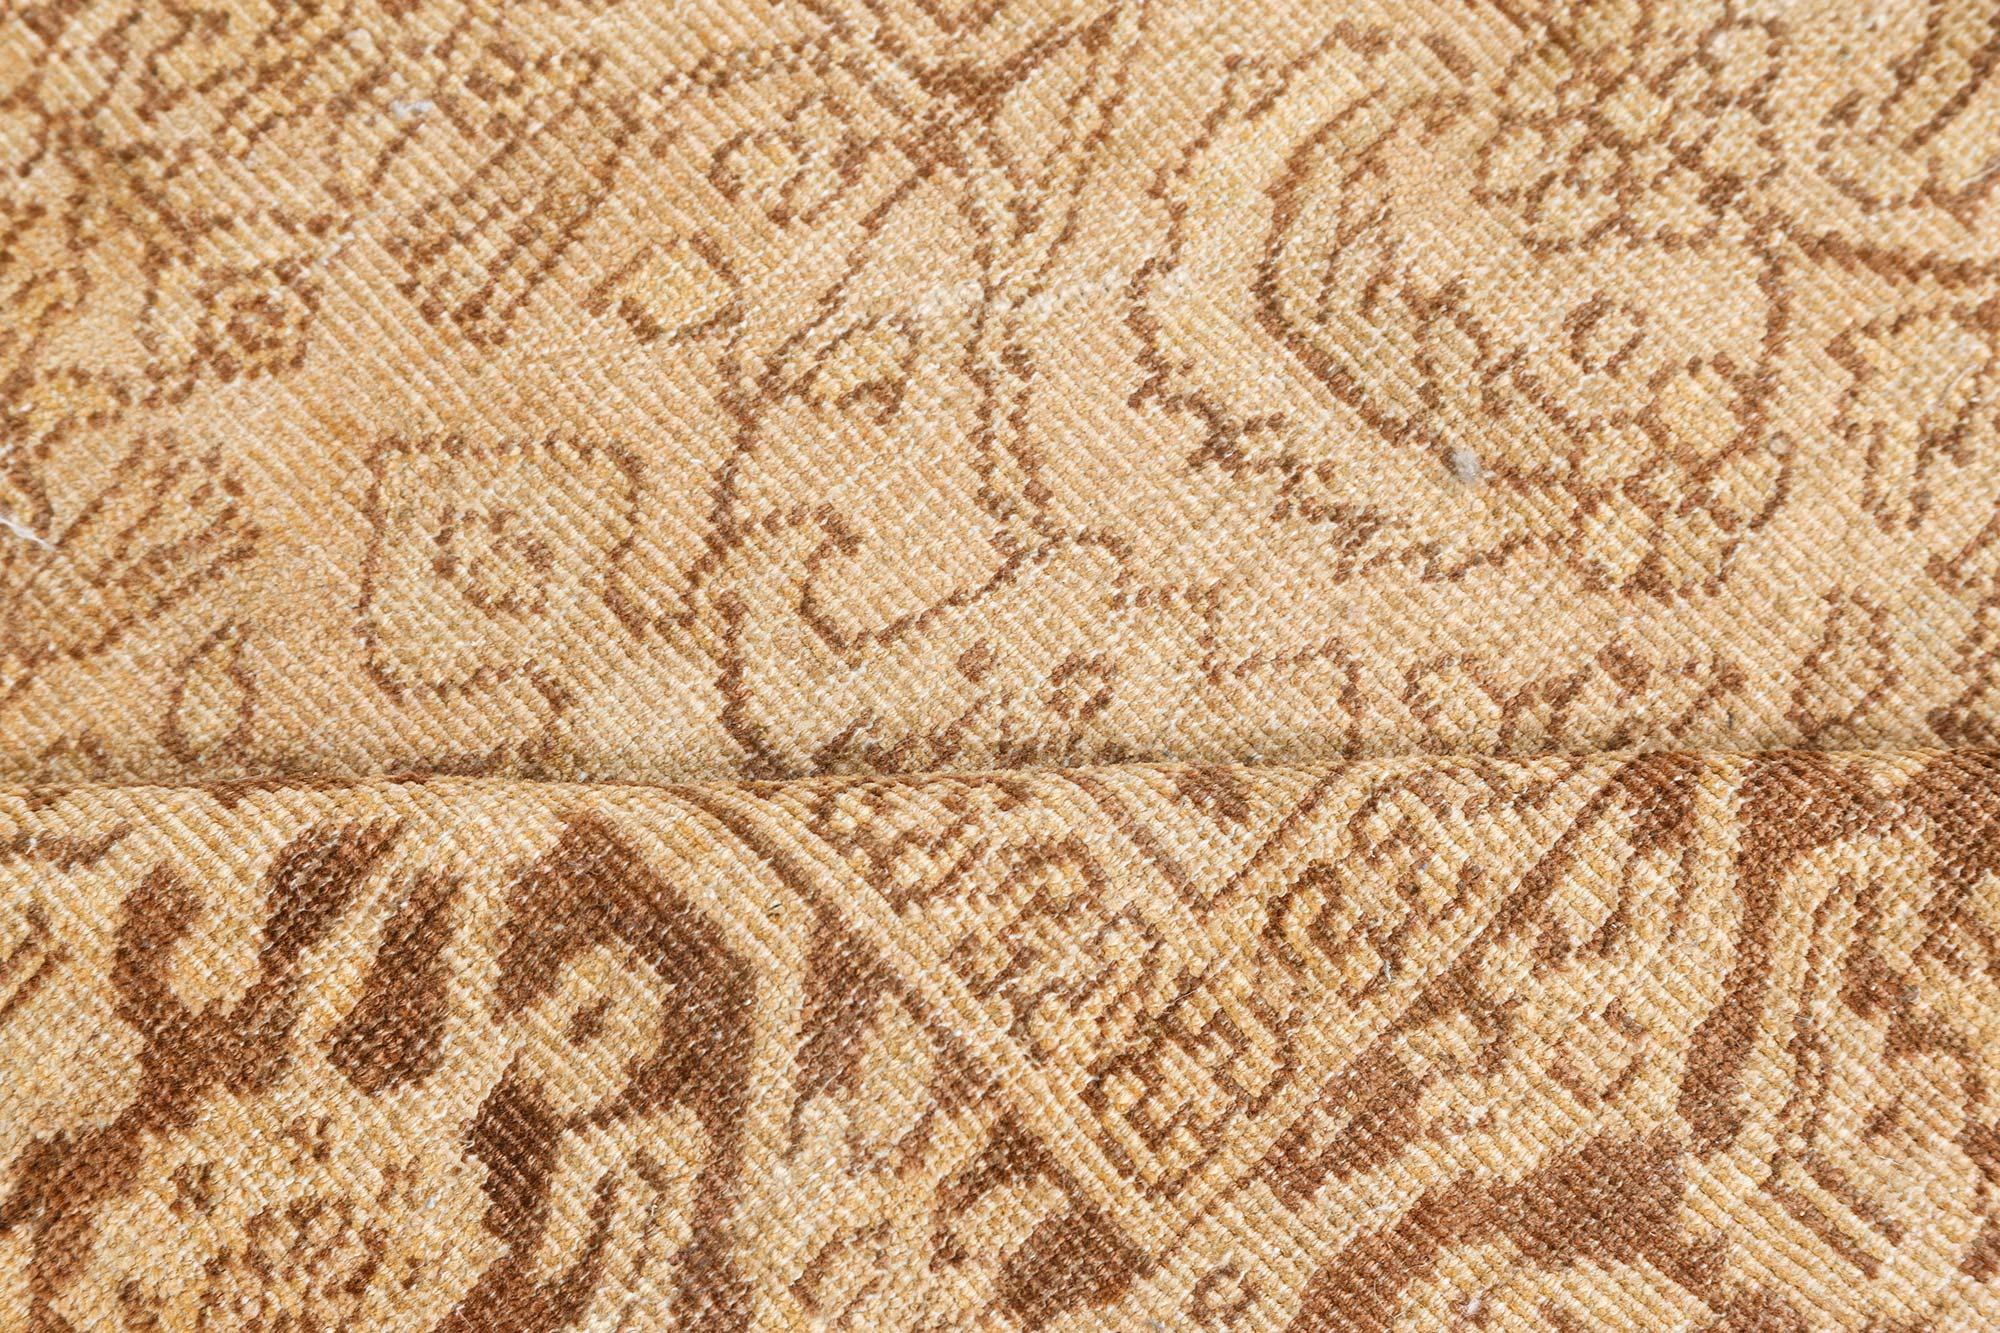 Authentic Persian Sultanabad botanic handmade wool rug
Size: 11'6